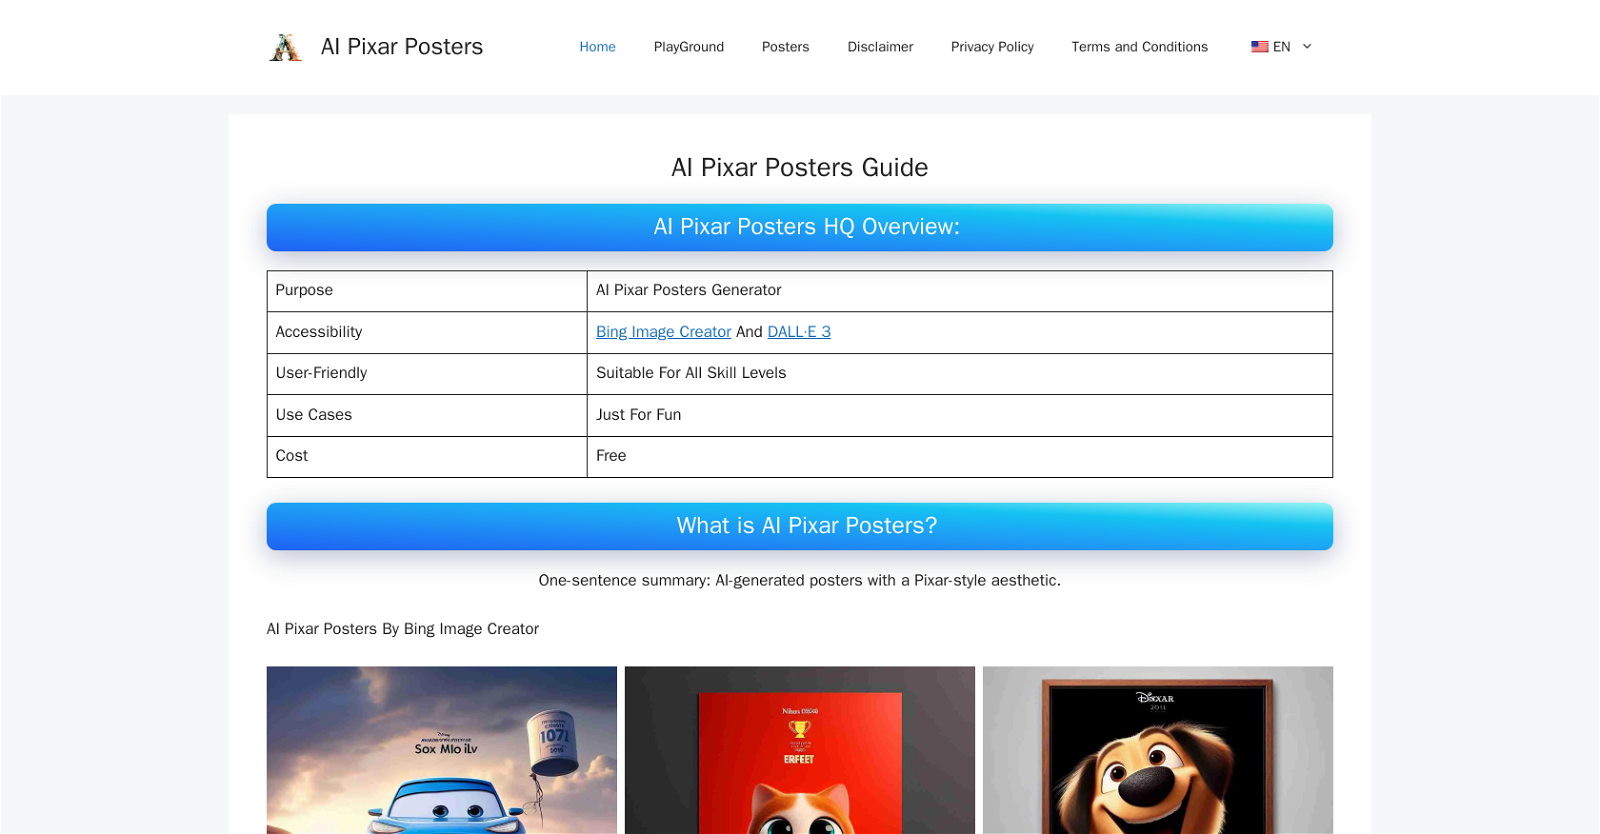 Pixar AI Posters website